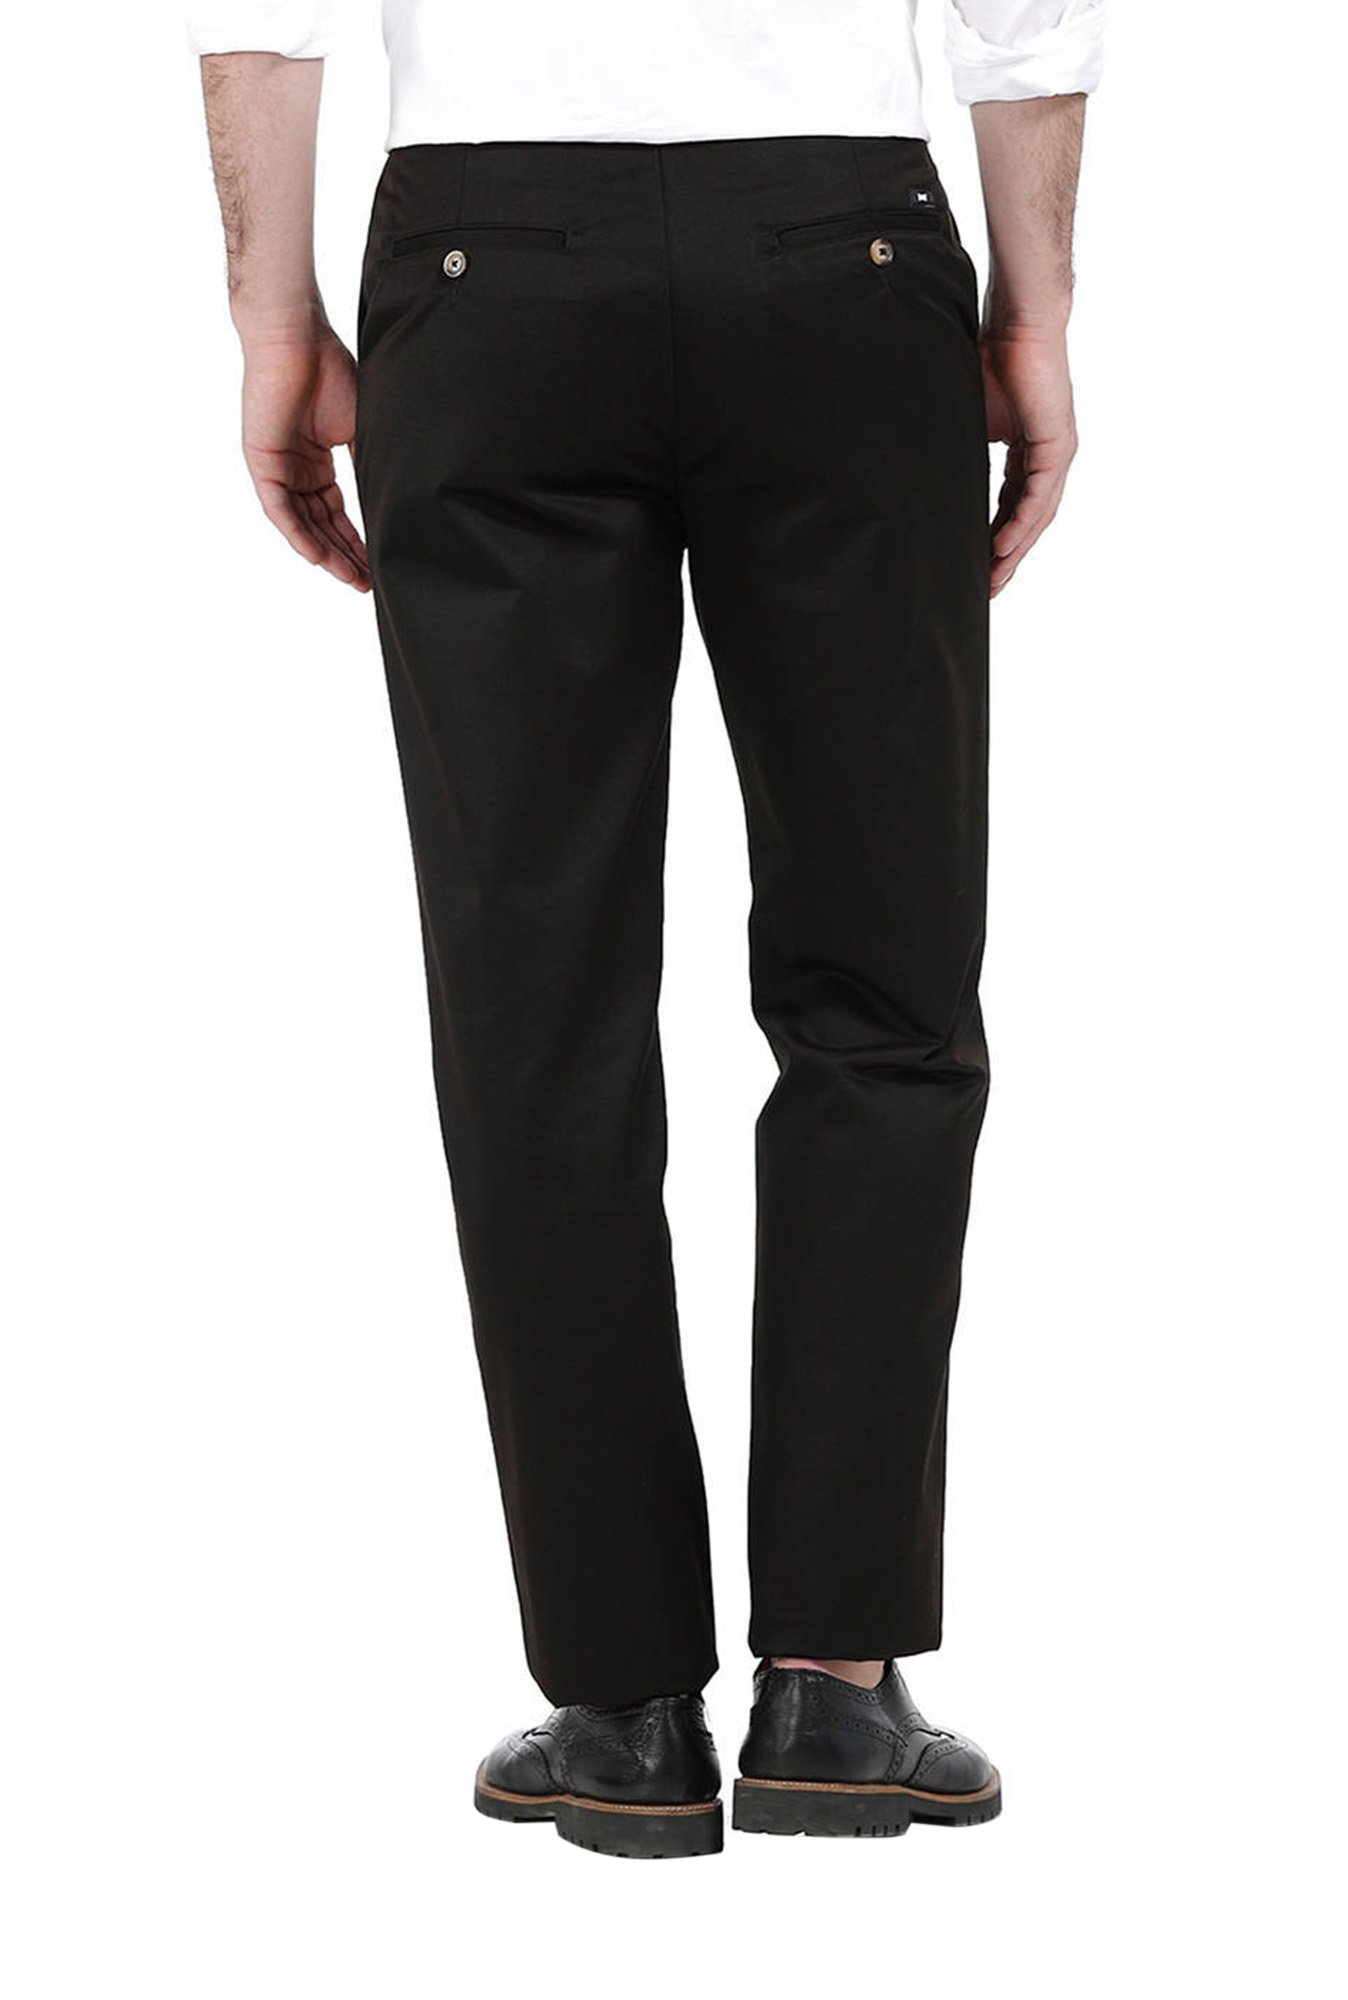 Buy Basics Black Mid Rise Comfort Fit Solid Trousers for Men Online  Tata  CLiQ